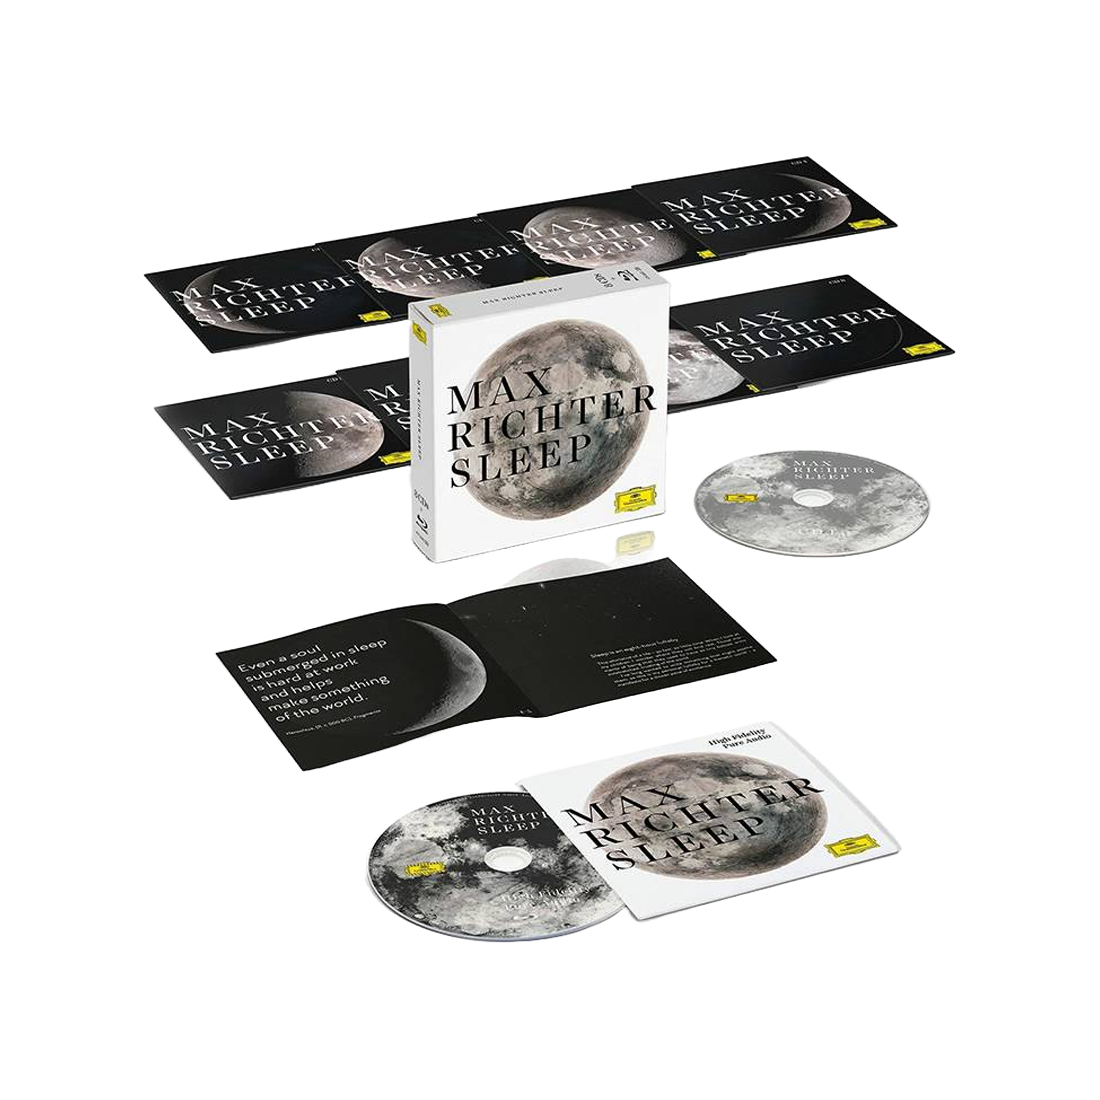 Max Richter - From Sleep: CD Box Set + Blu-Ray Audio